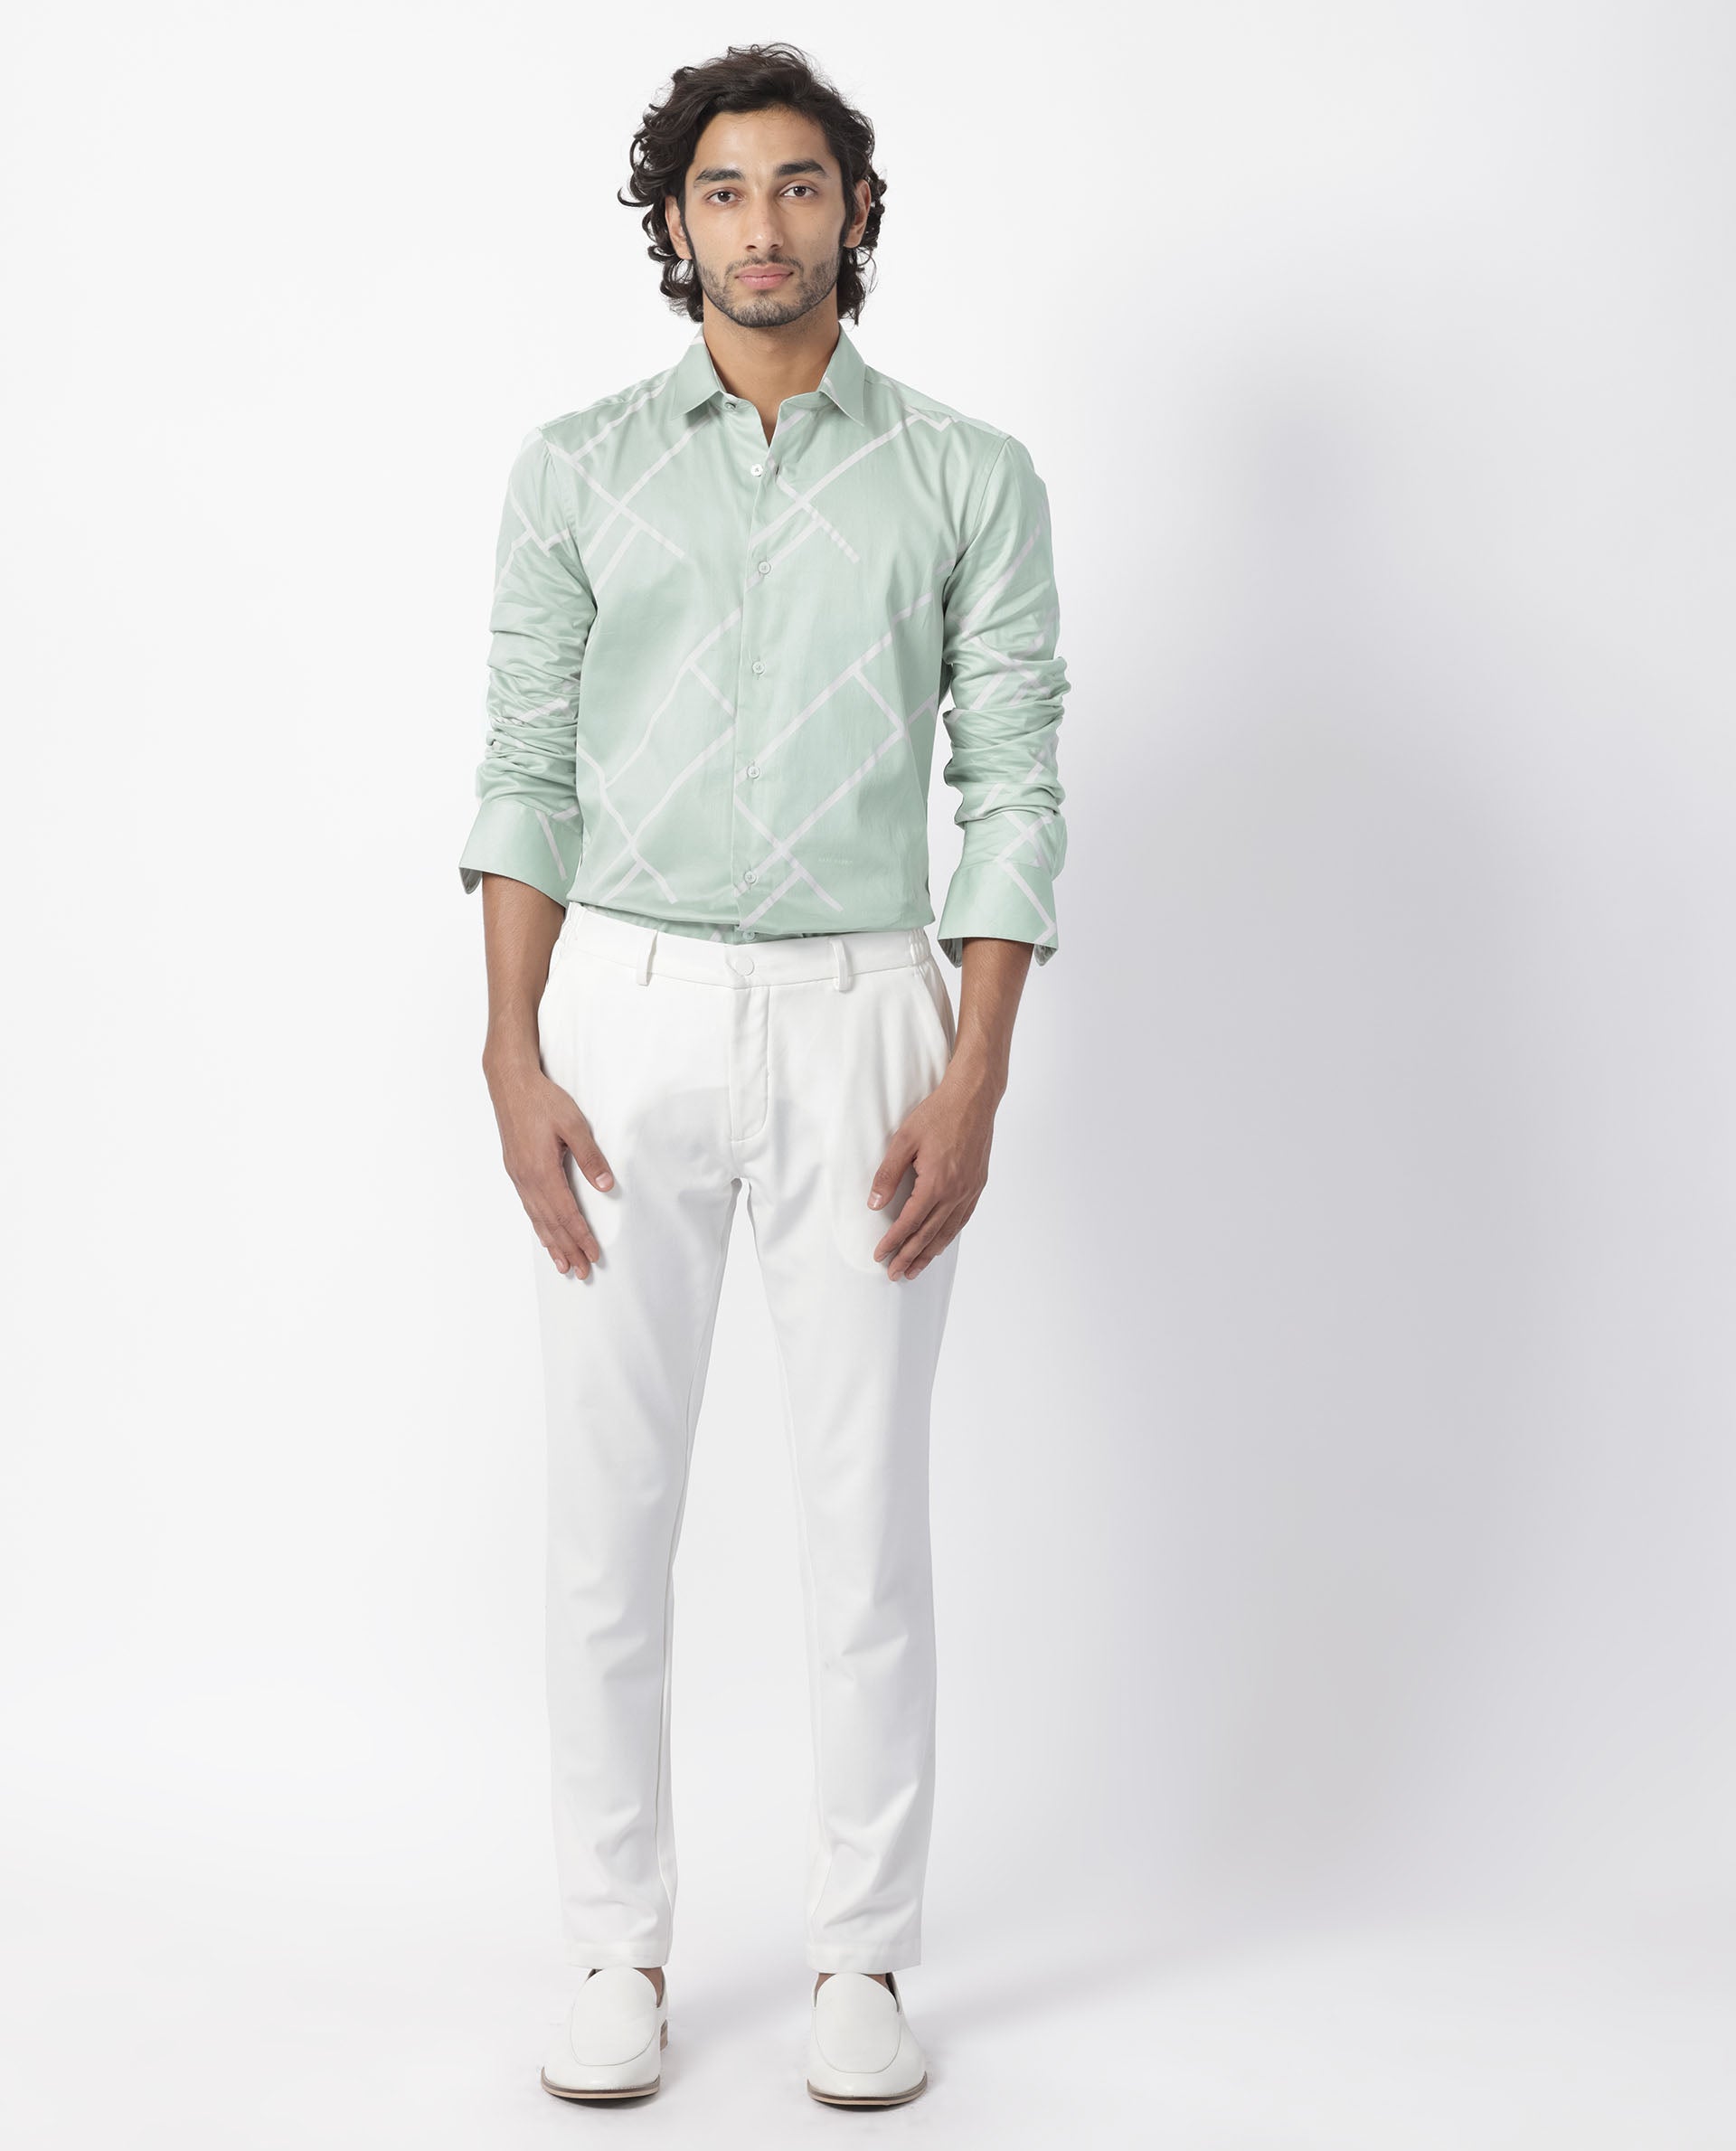 Green & White Pants | Light green dress shirt, Mens outfits, White pants